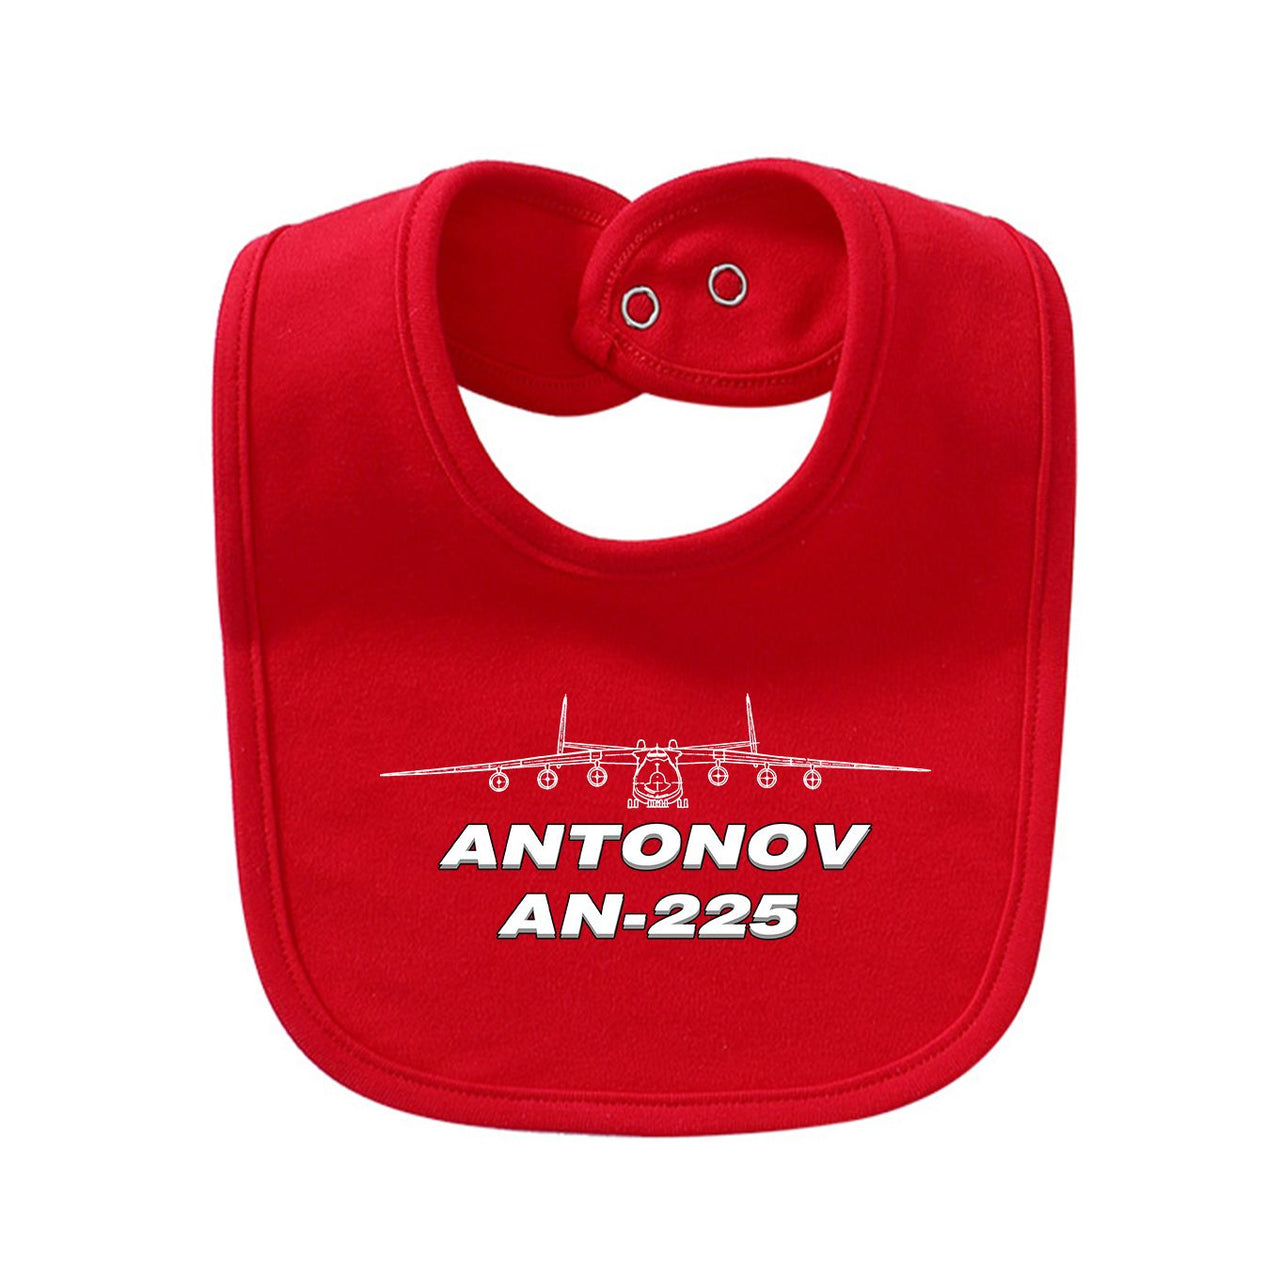 Antonov AN-225 (26) Designed Baby Saliva & Feeding Towels